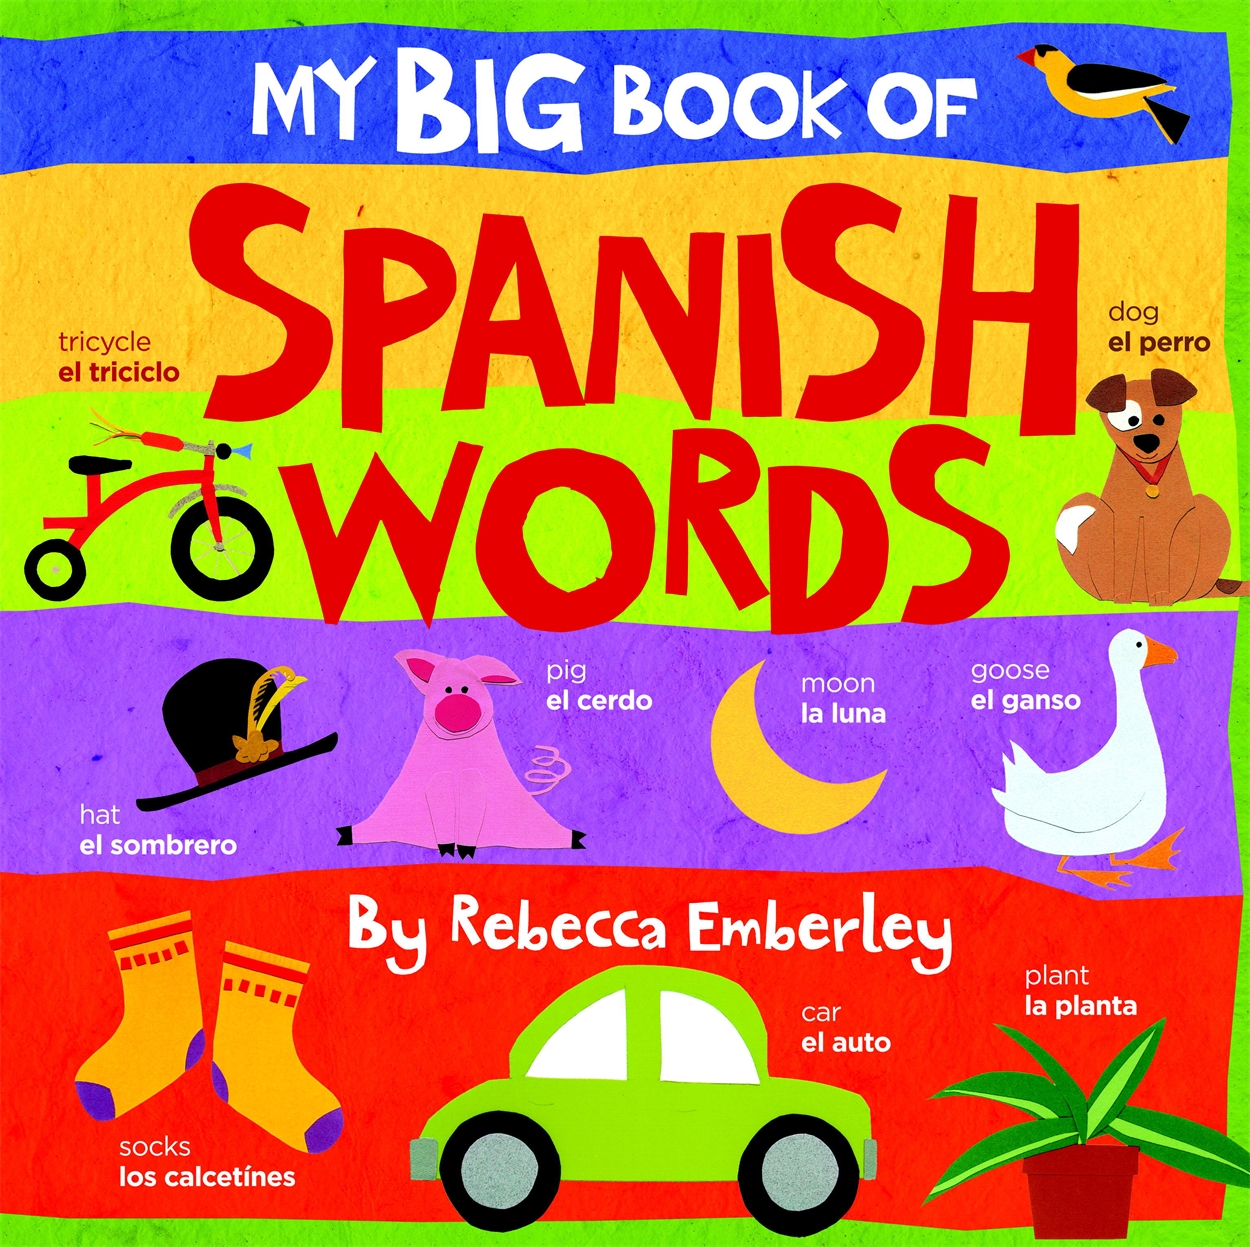 My　Big　Hachette　Spanish　Rebecca　Emberley　Book　by　Words　Of　UK